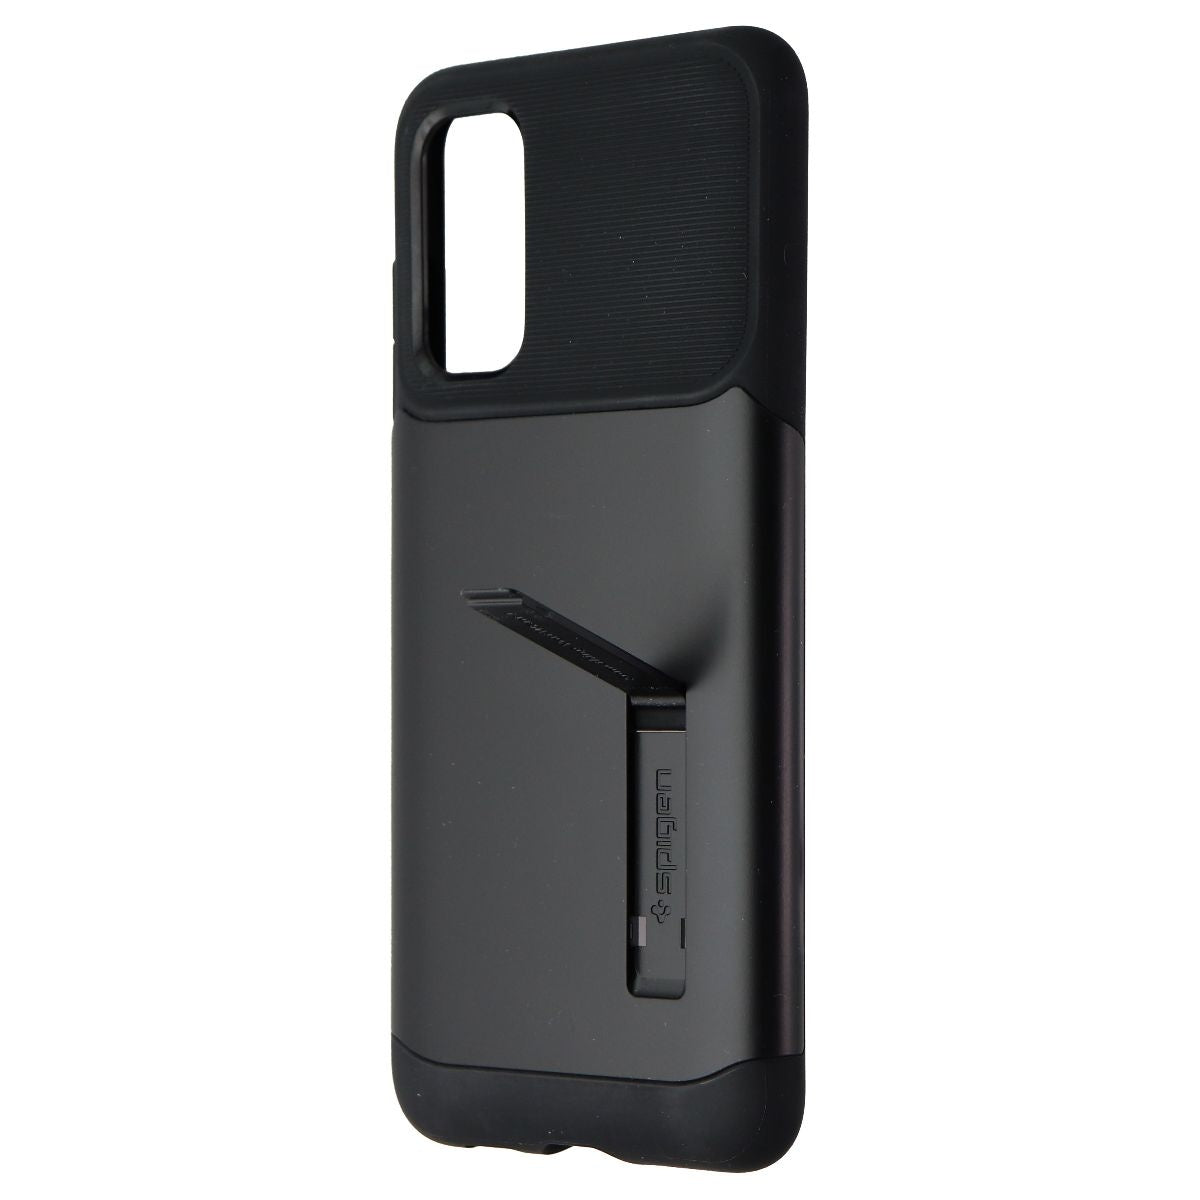 Spigen Slim Armor Designed for Samsung Galaxy S20 Case (2020) - Black Cell Phone - Cases, Covers & Skins Spigen    - Simple Cell Bulk Wholesale Pricing - USA Seller